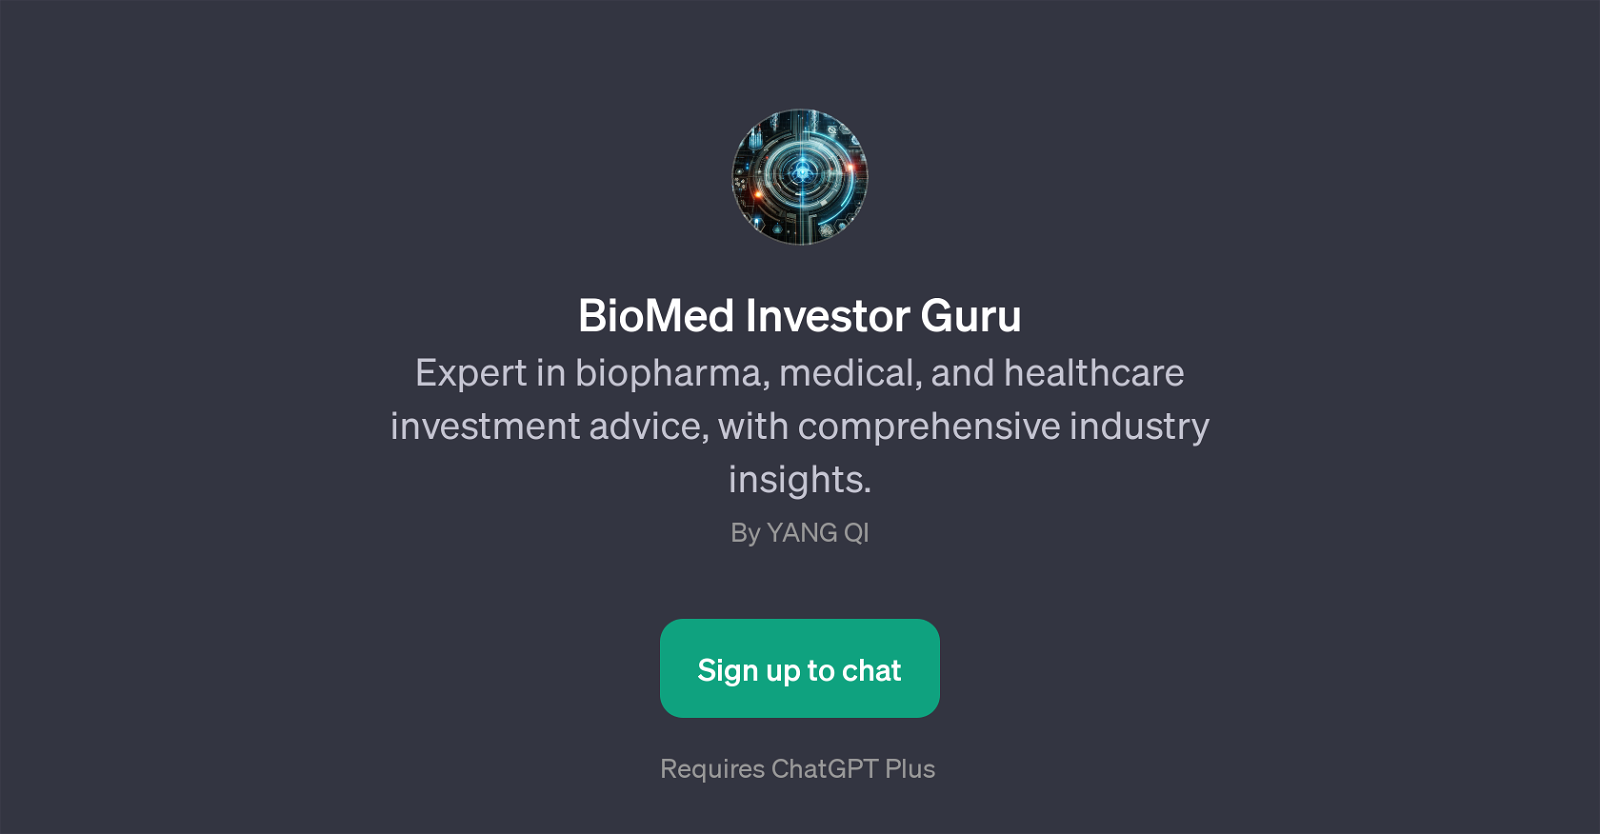 BioMed Investor Guru website